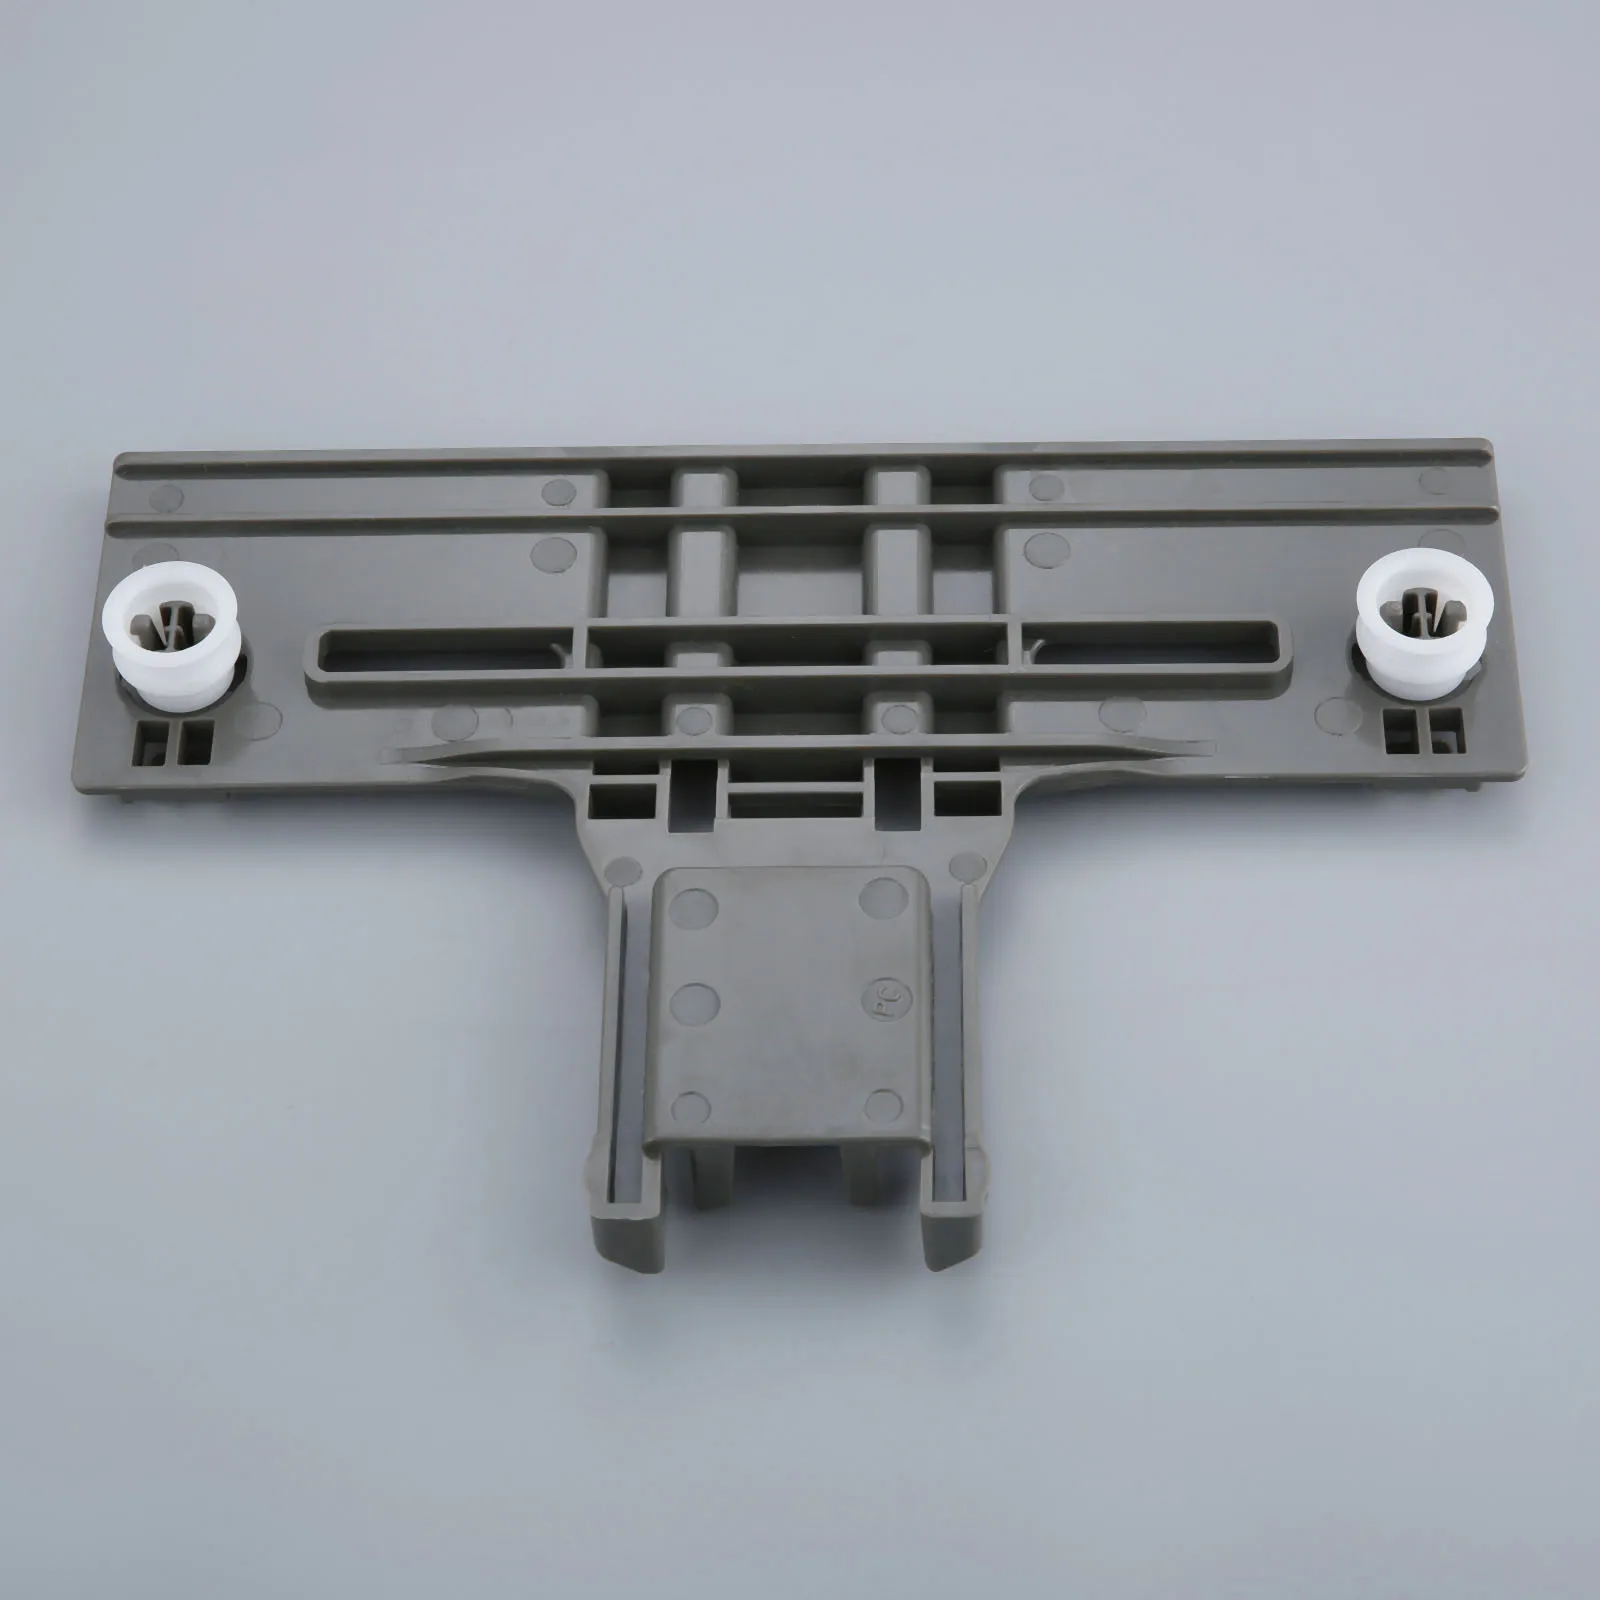 

W10350376 Dishwasher Upper Rack Adjuster Fits for Whirlpool KitchenAid Kenmore Jenn-Air Replaces AP5272176, AP5956100, W10253546